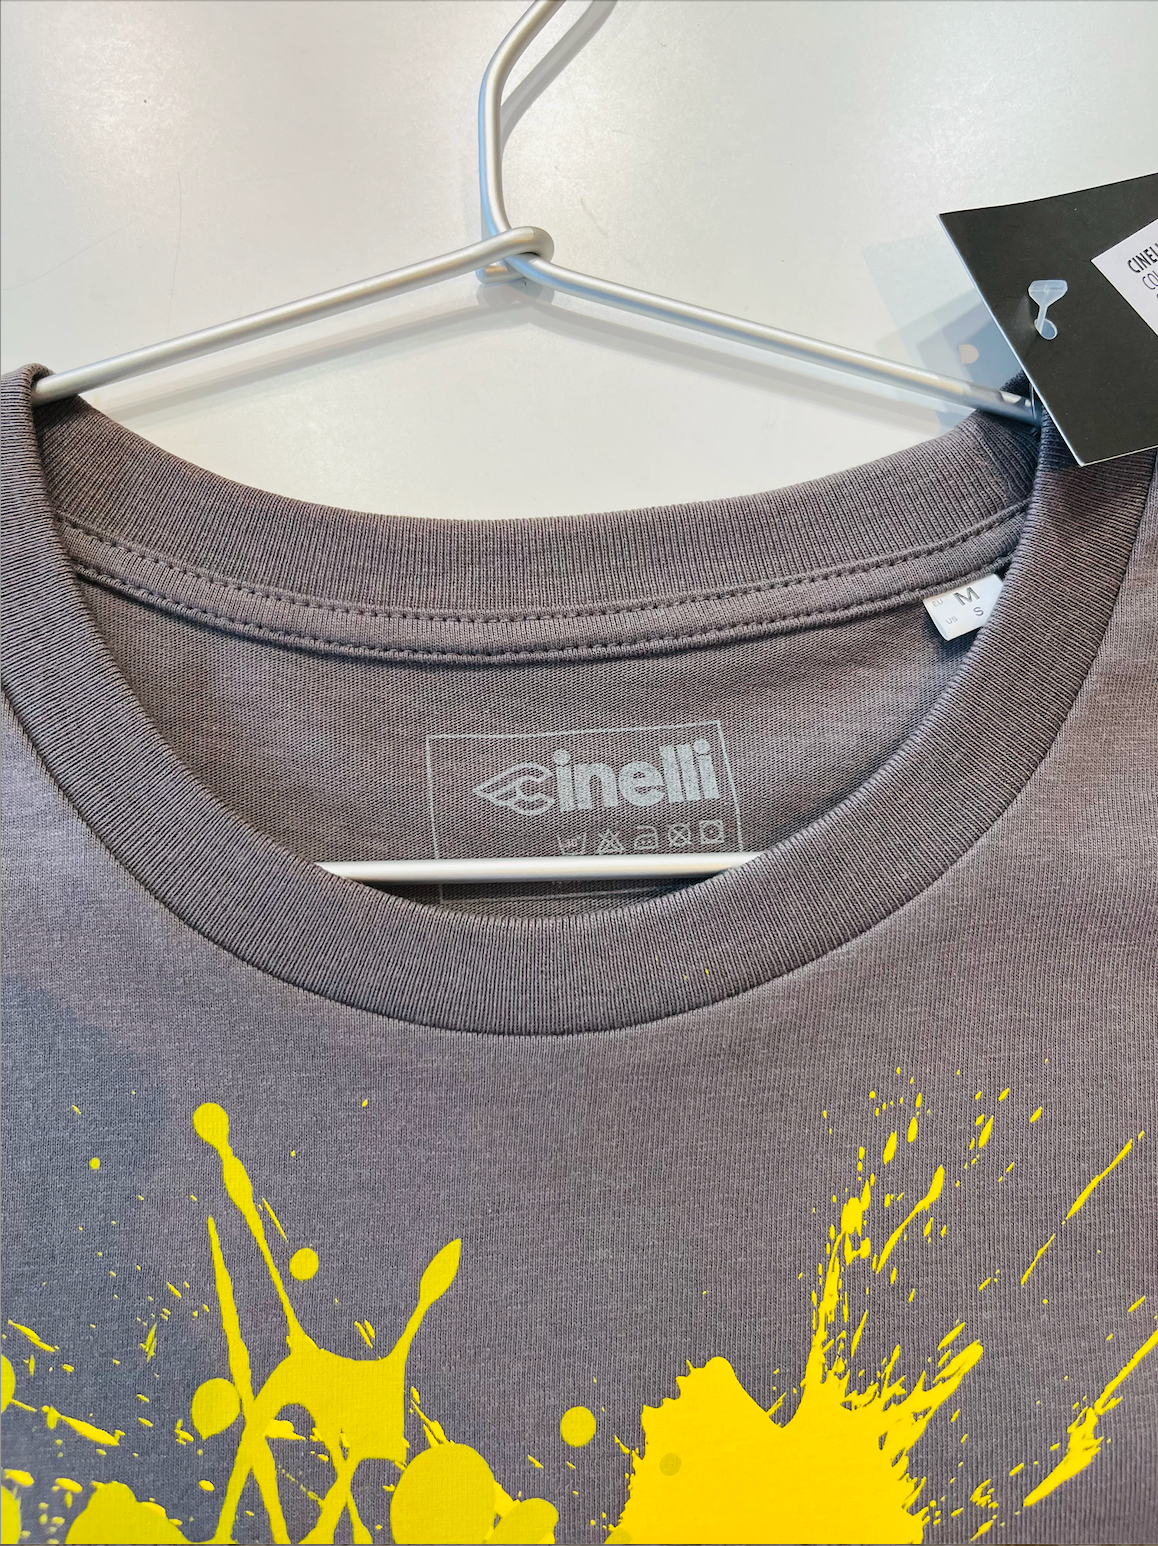 Cinelli/チネリ】SPLASH Tシャツ チャコール【新品】 メルカリShops